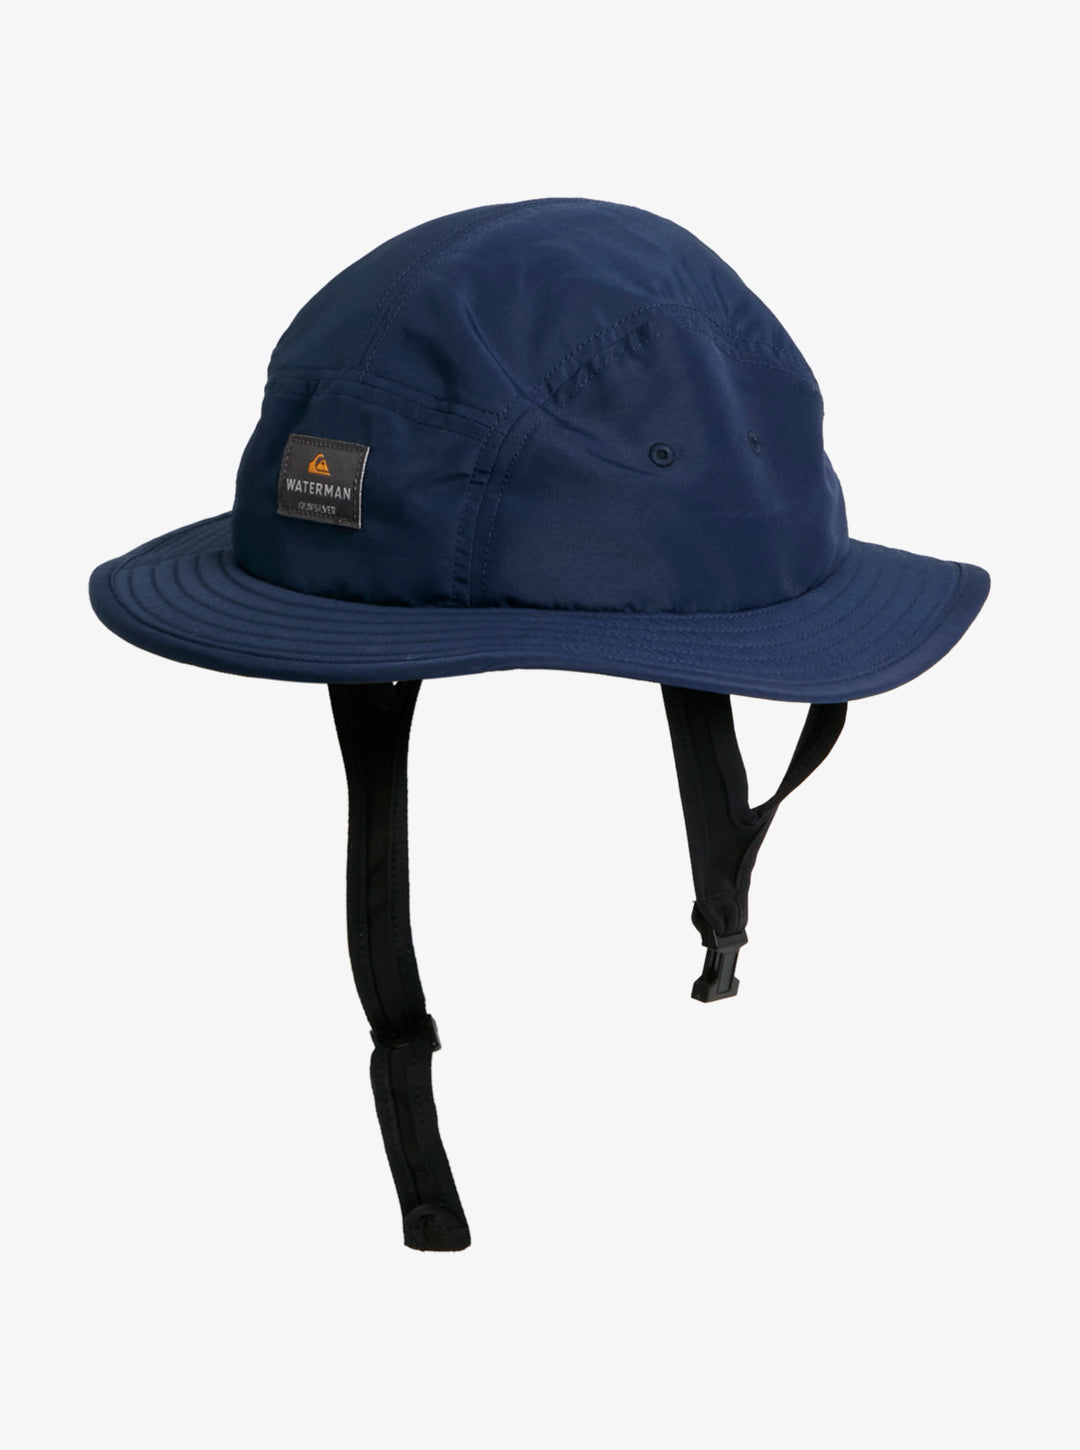 Quiksilver Waterman Surfari Bucket Surf Hat